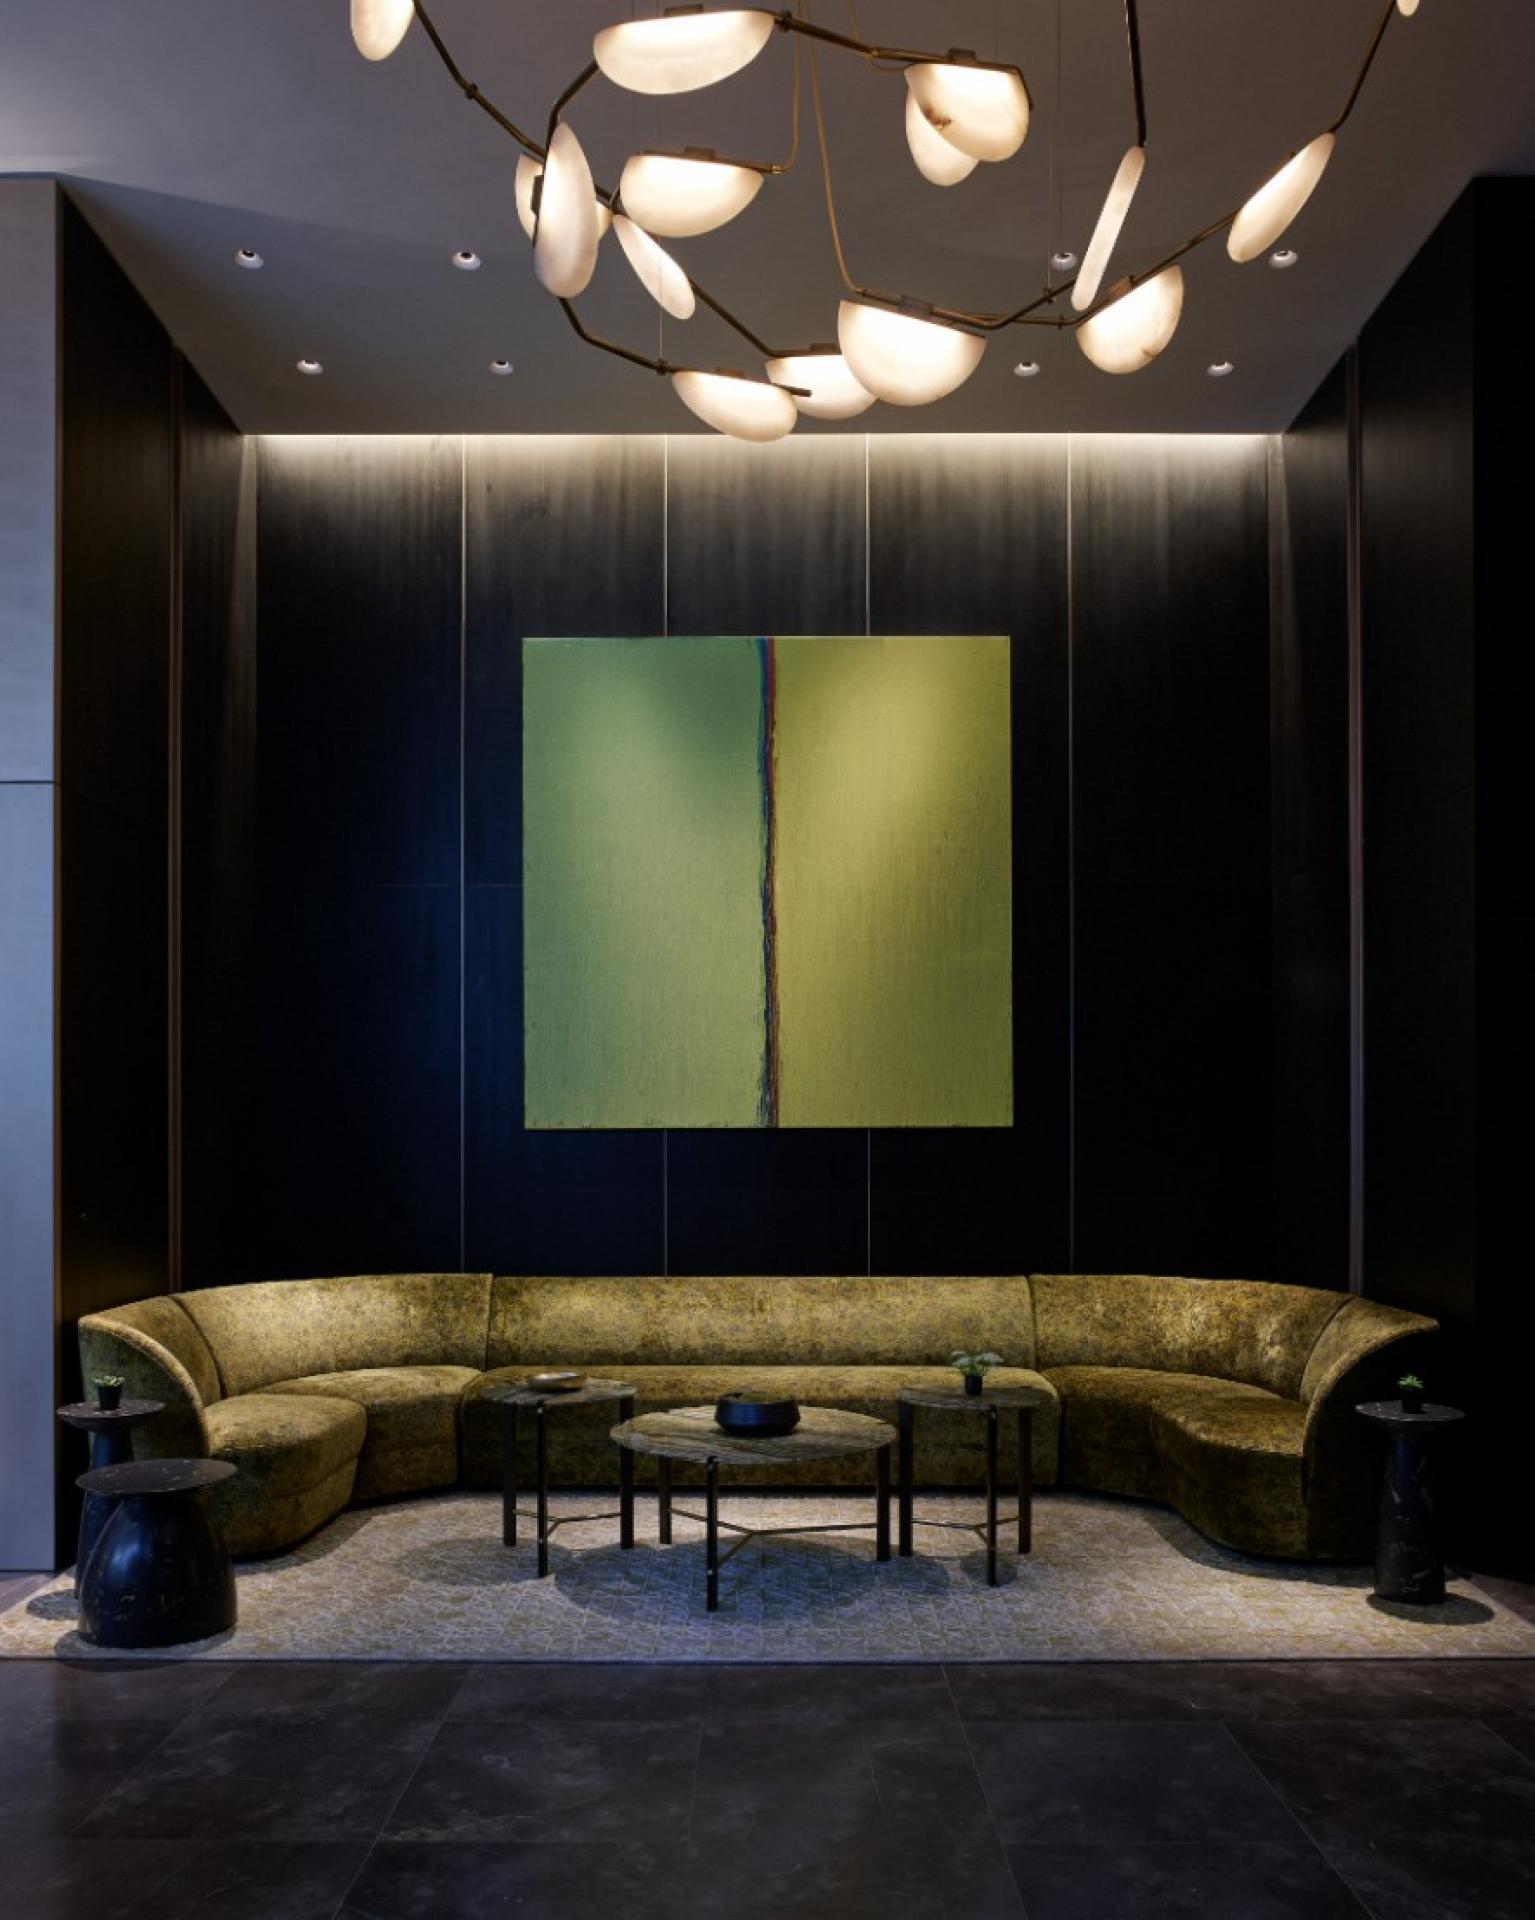 MUSE Hotel Awards 2023 Winner - The Ritz-Carlton New York, NoMad